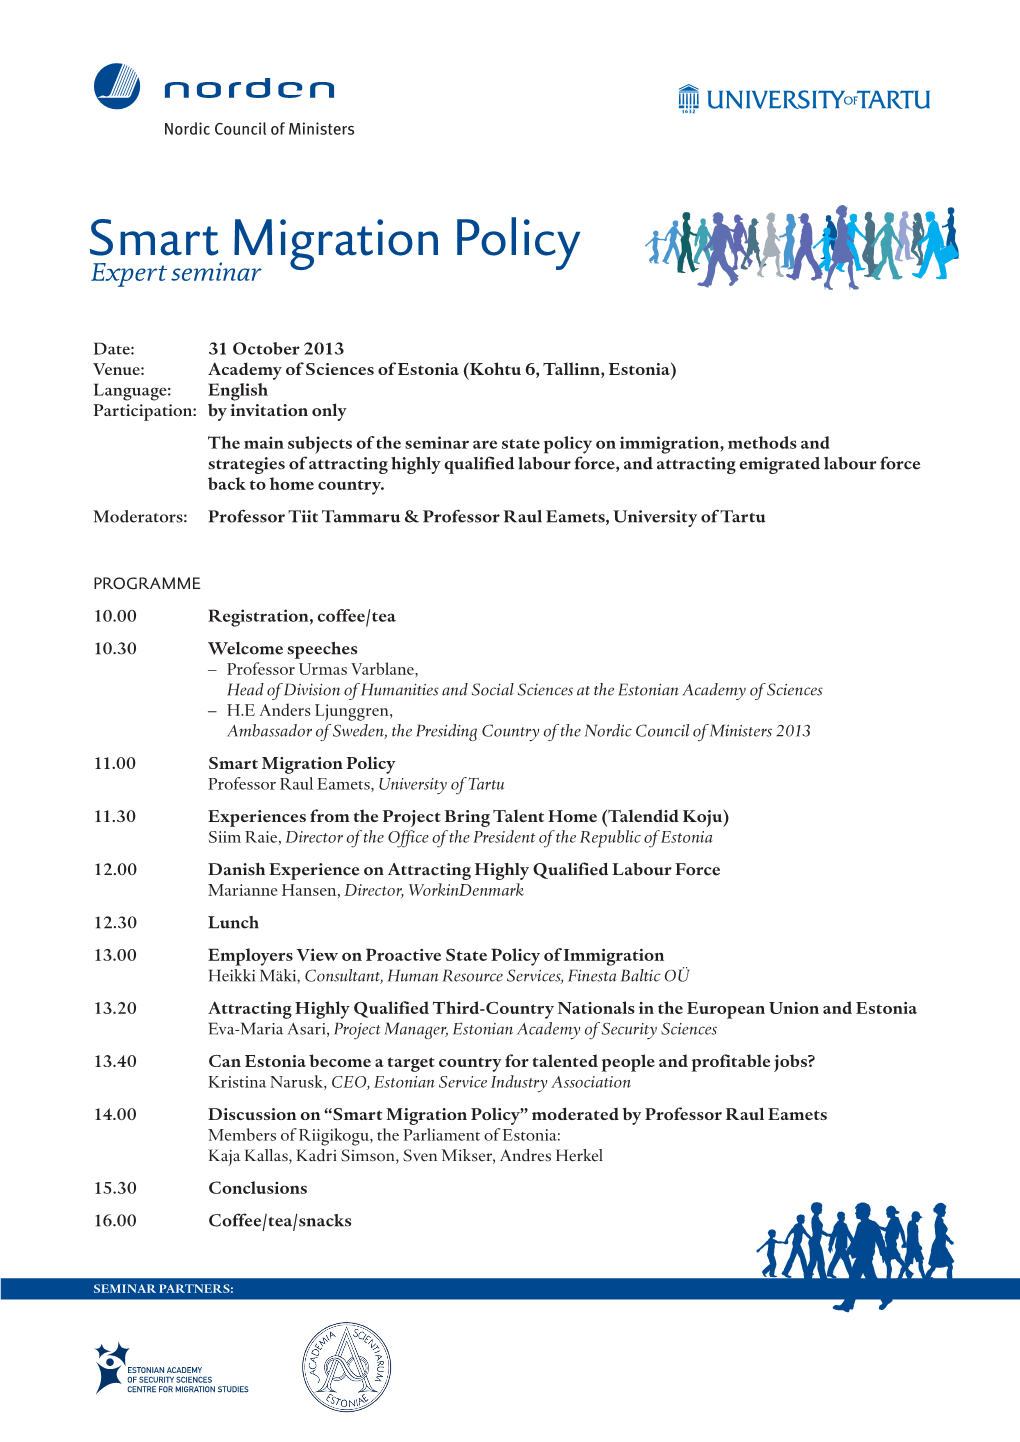 Smart Migration Policy Expert Seminar